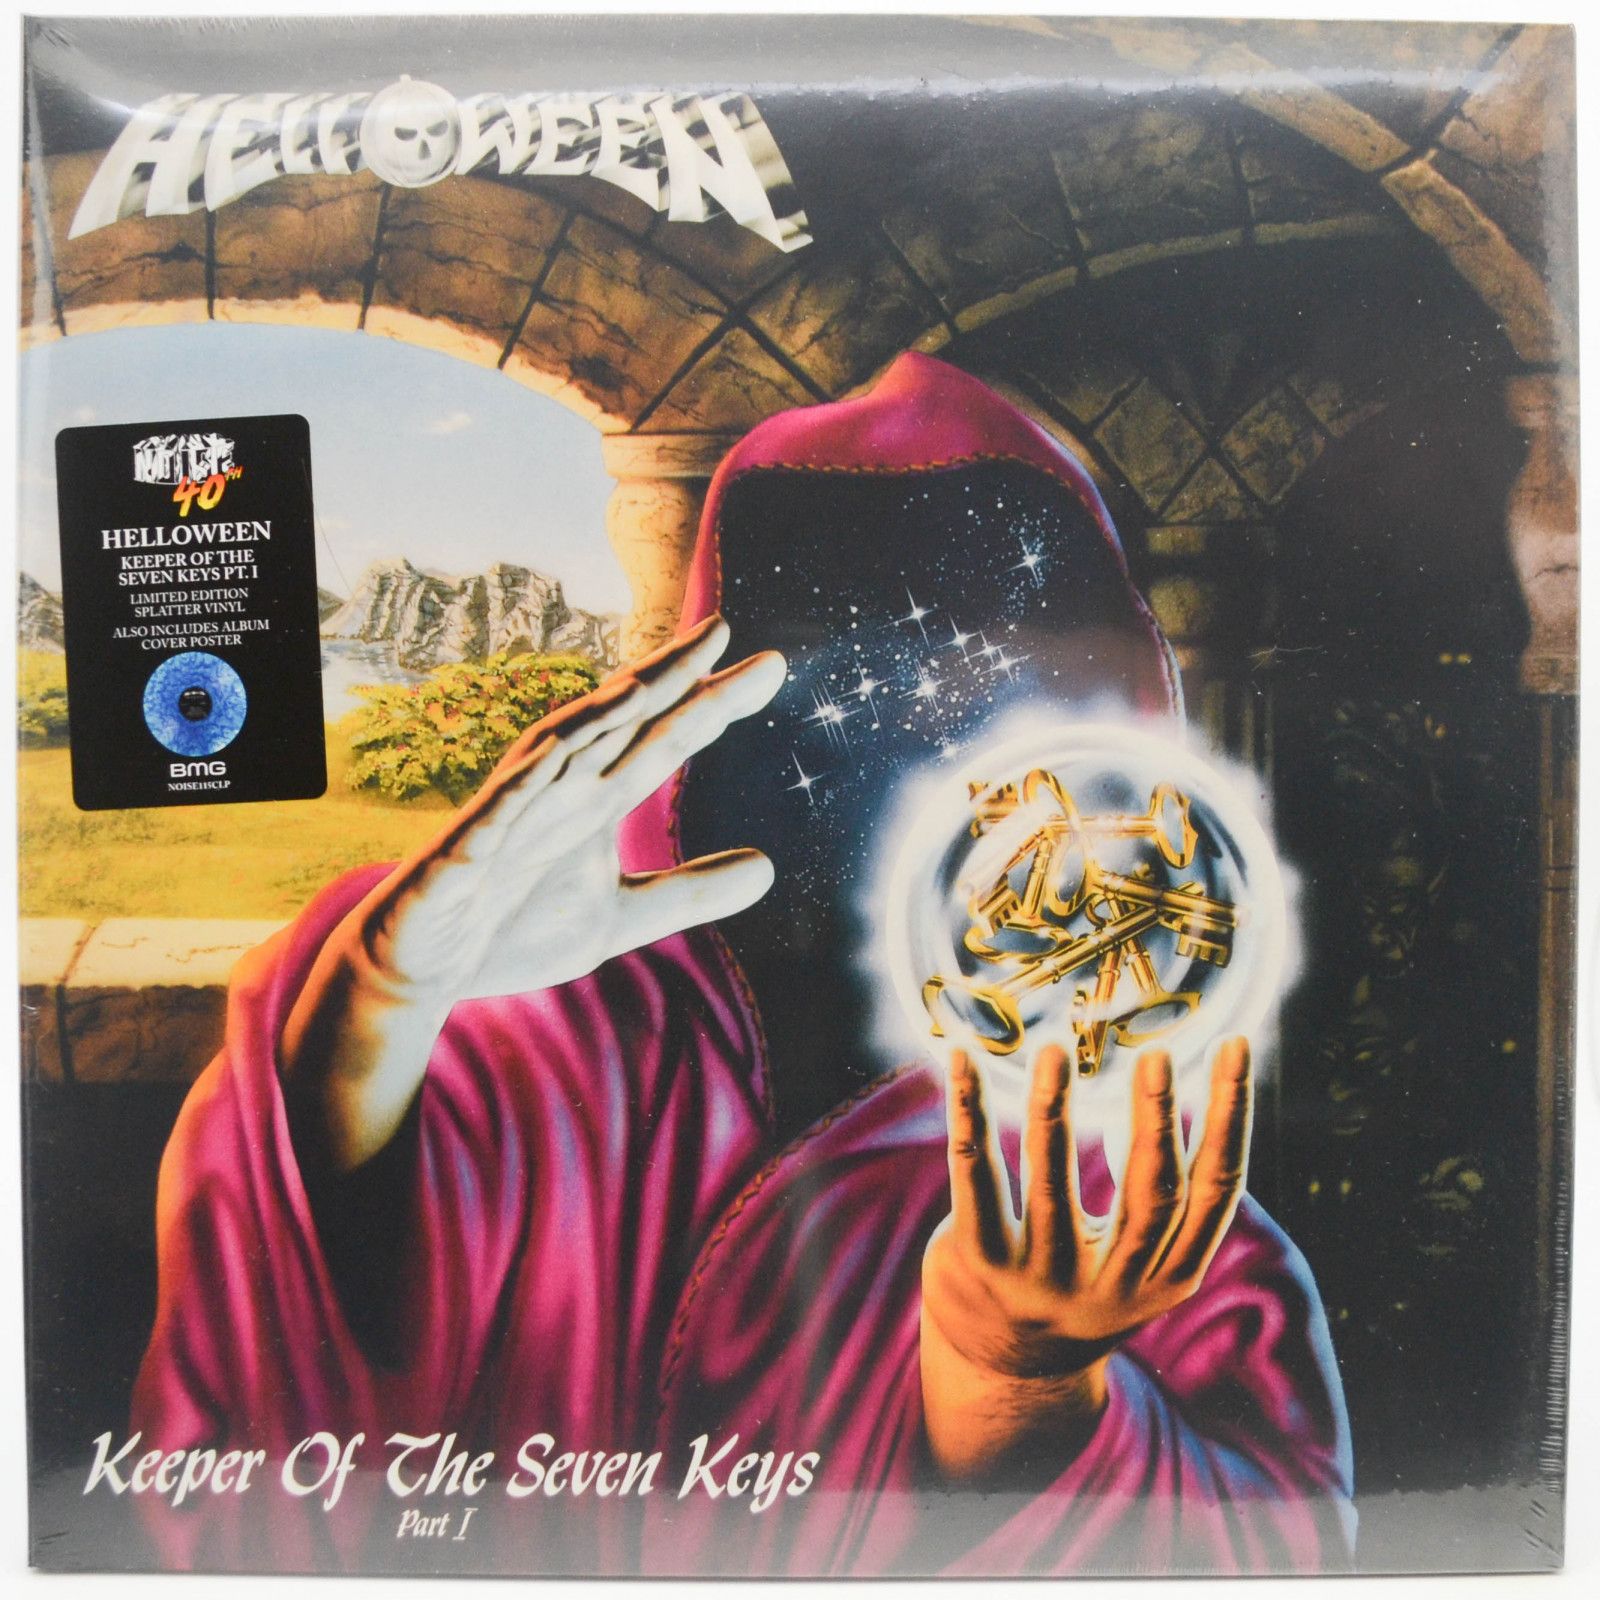 Helloween — Keeper Of The Seven Keys (Part I), 1987